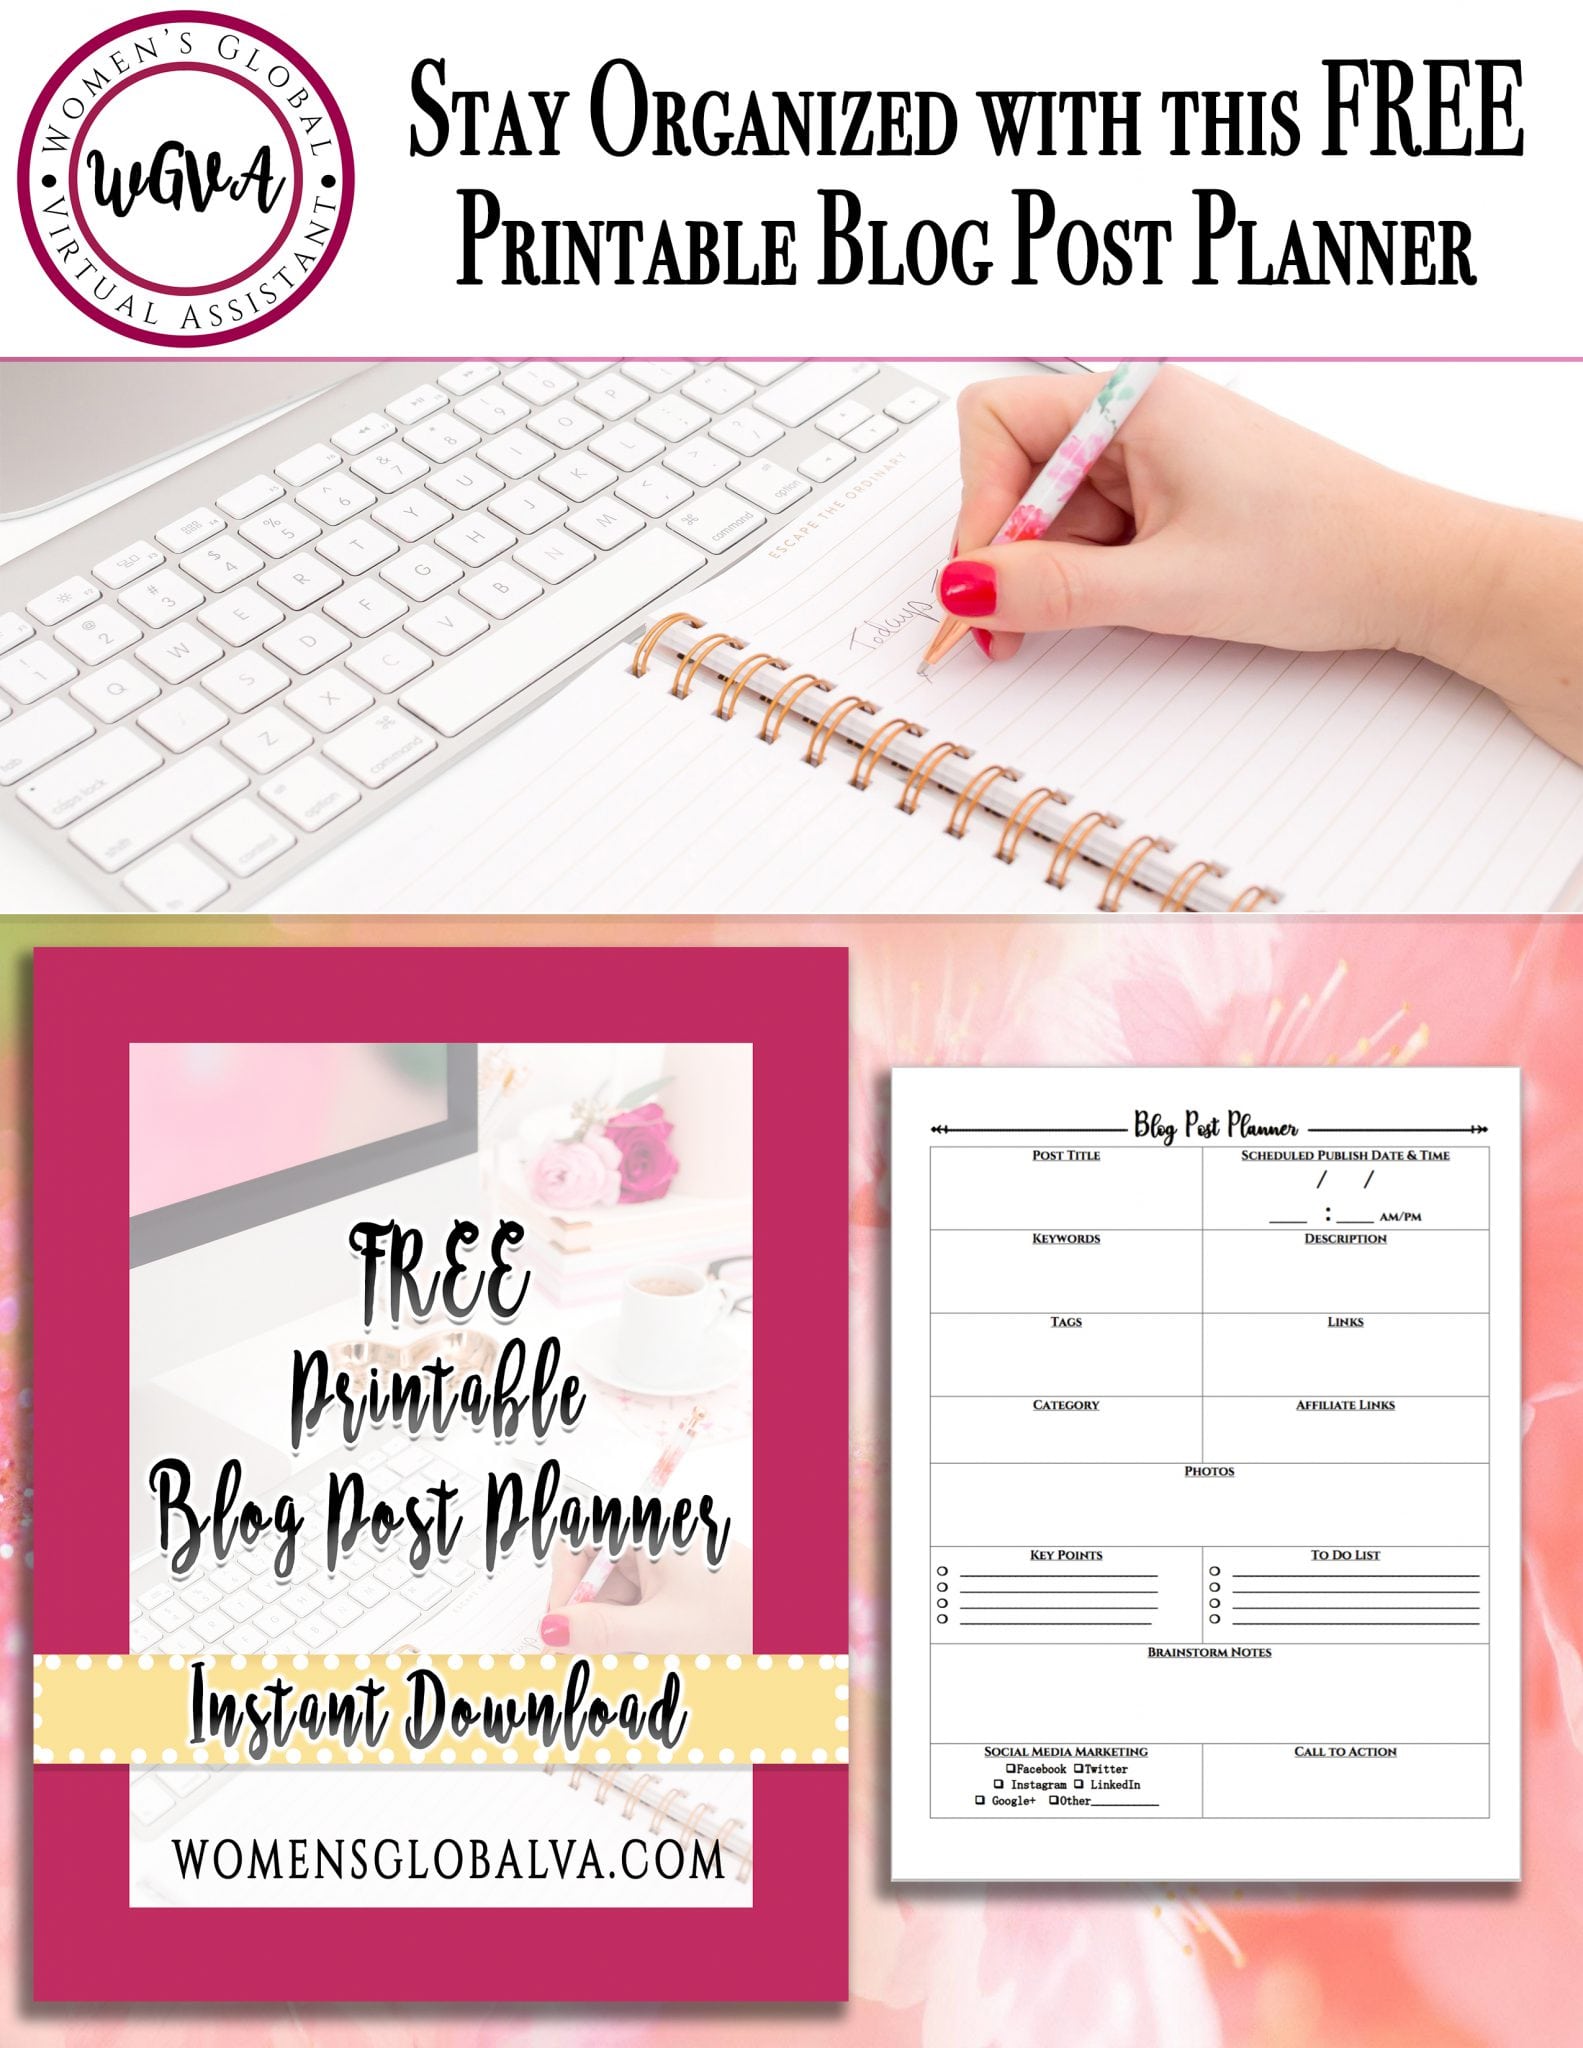 FREE Blog Post Planner